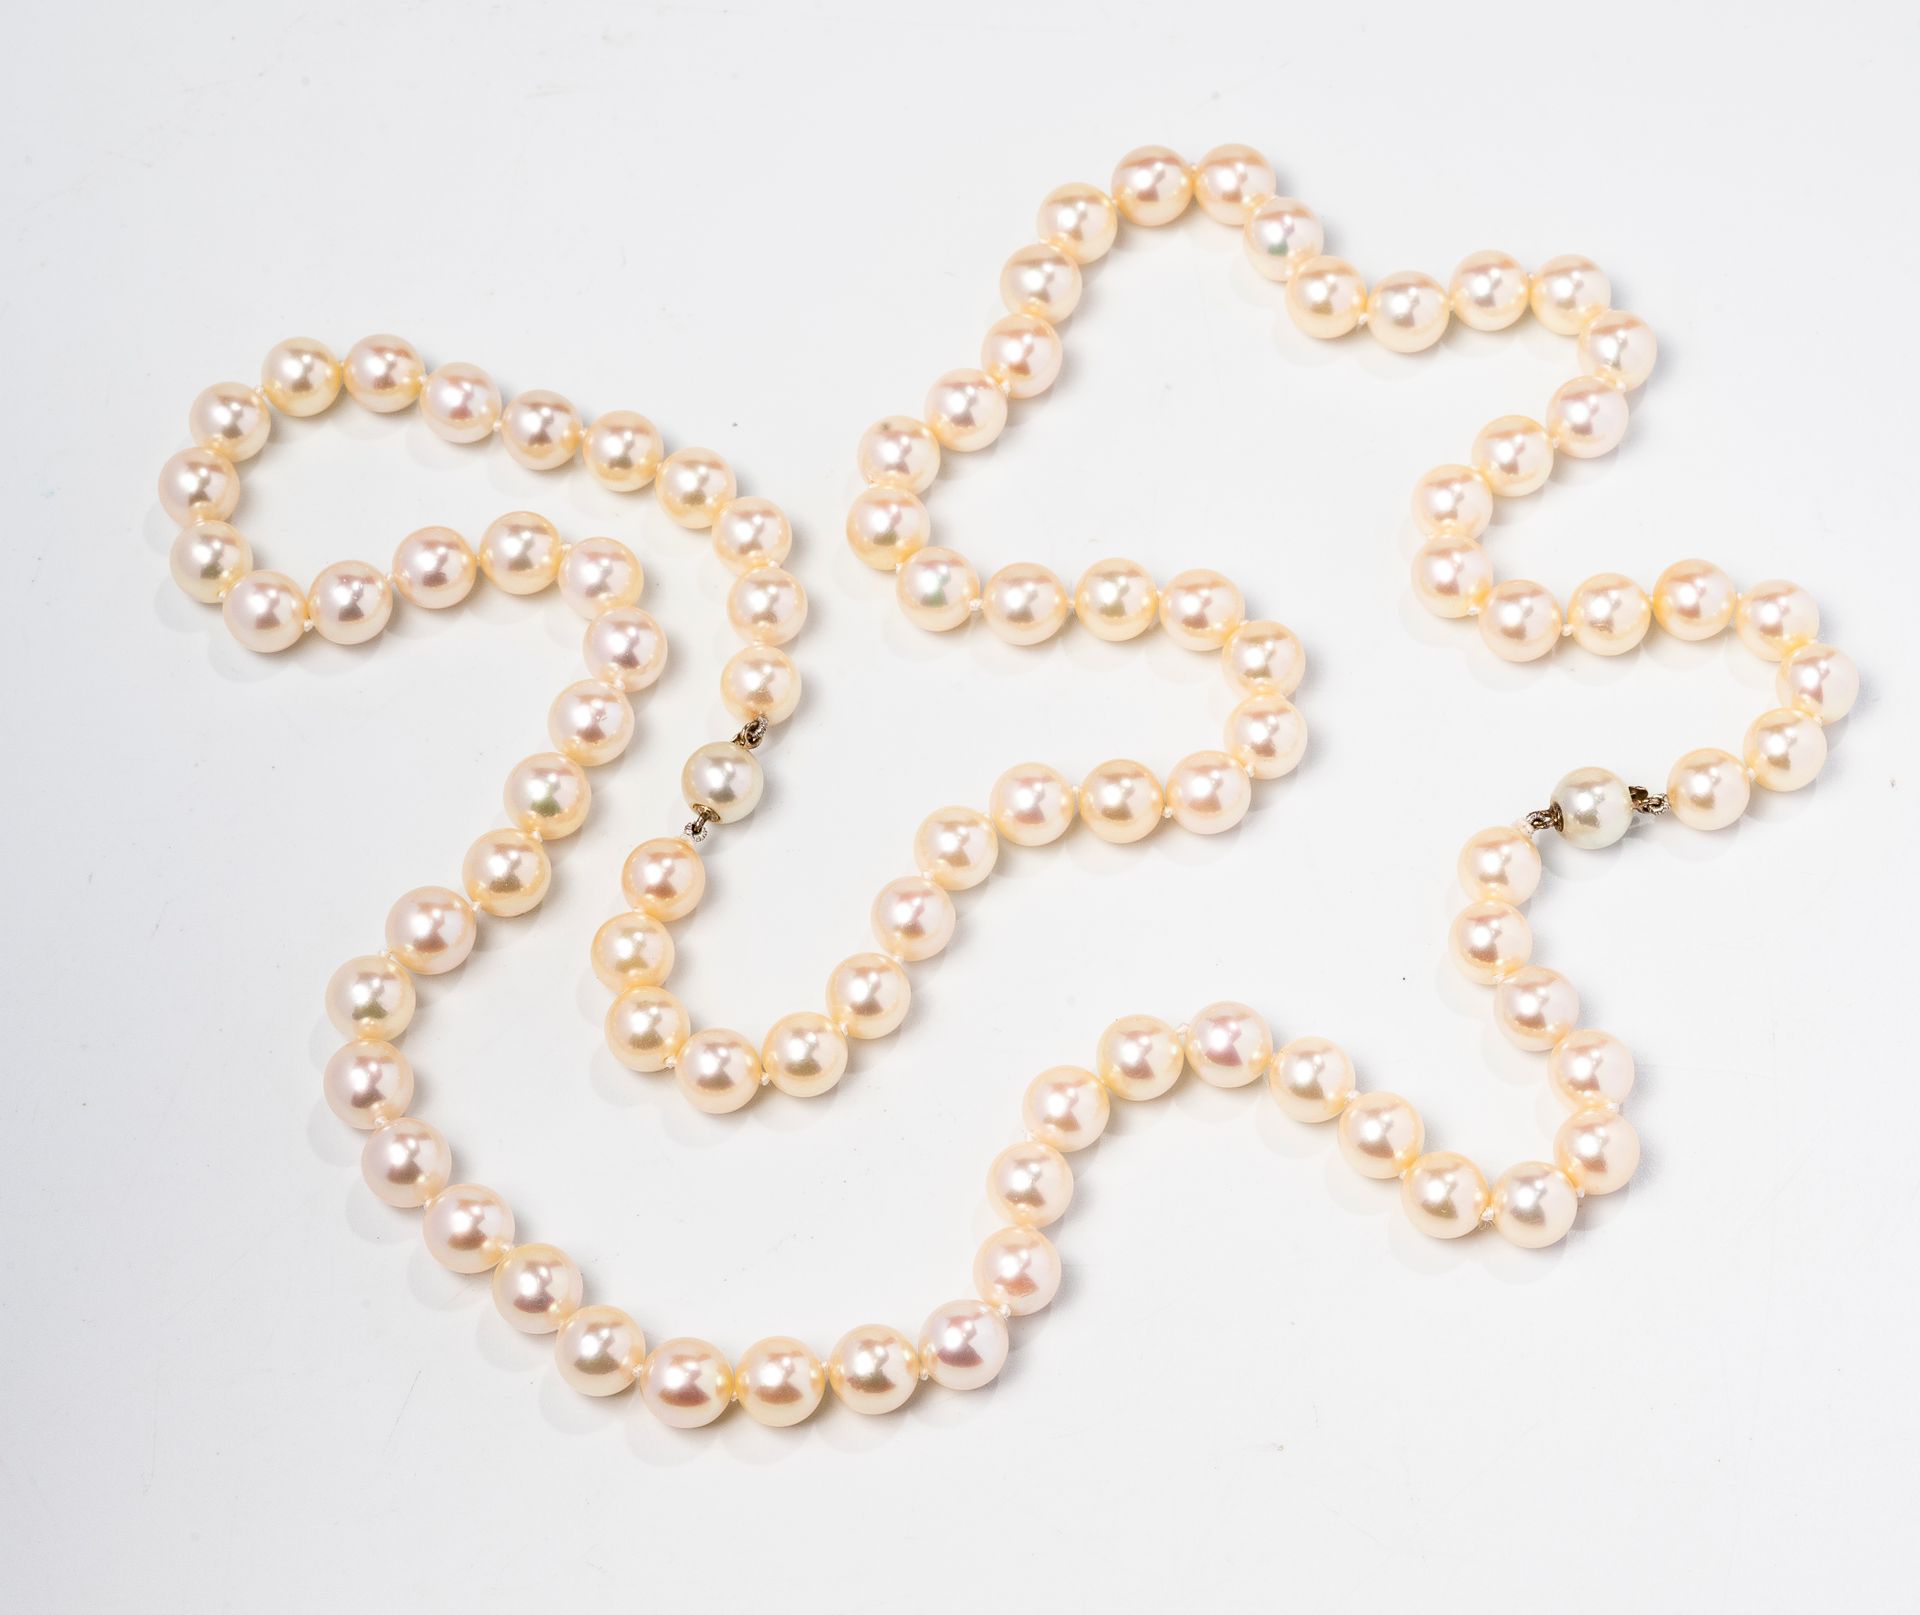 Null 长项链，可以变成两条养殖珍珠项链，幻觉扣。

毛重：72克。

长度：81.4厘米。